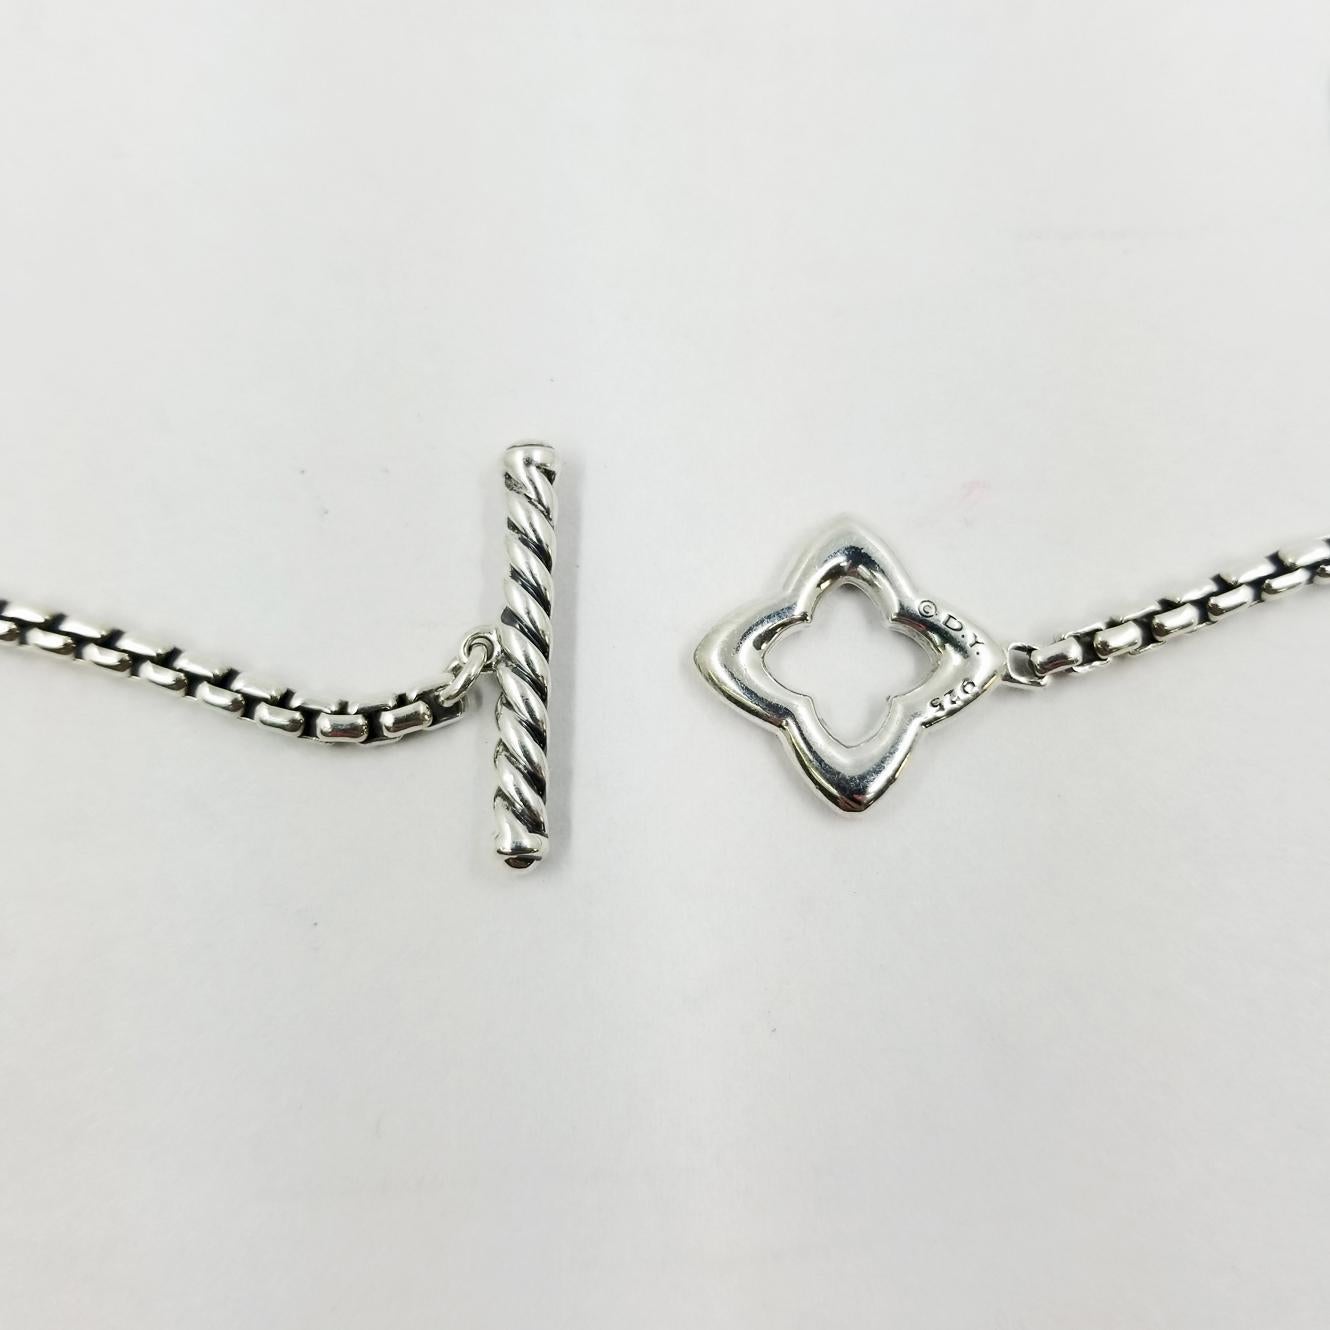 david yurman quatrefoil necklace